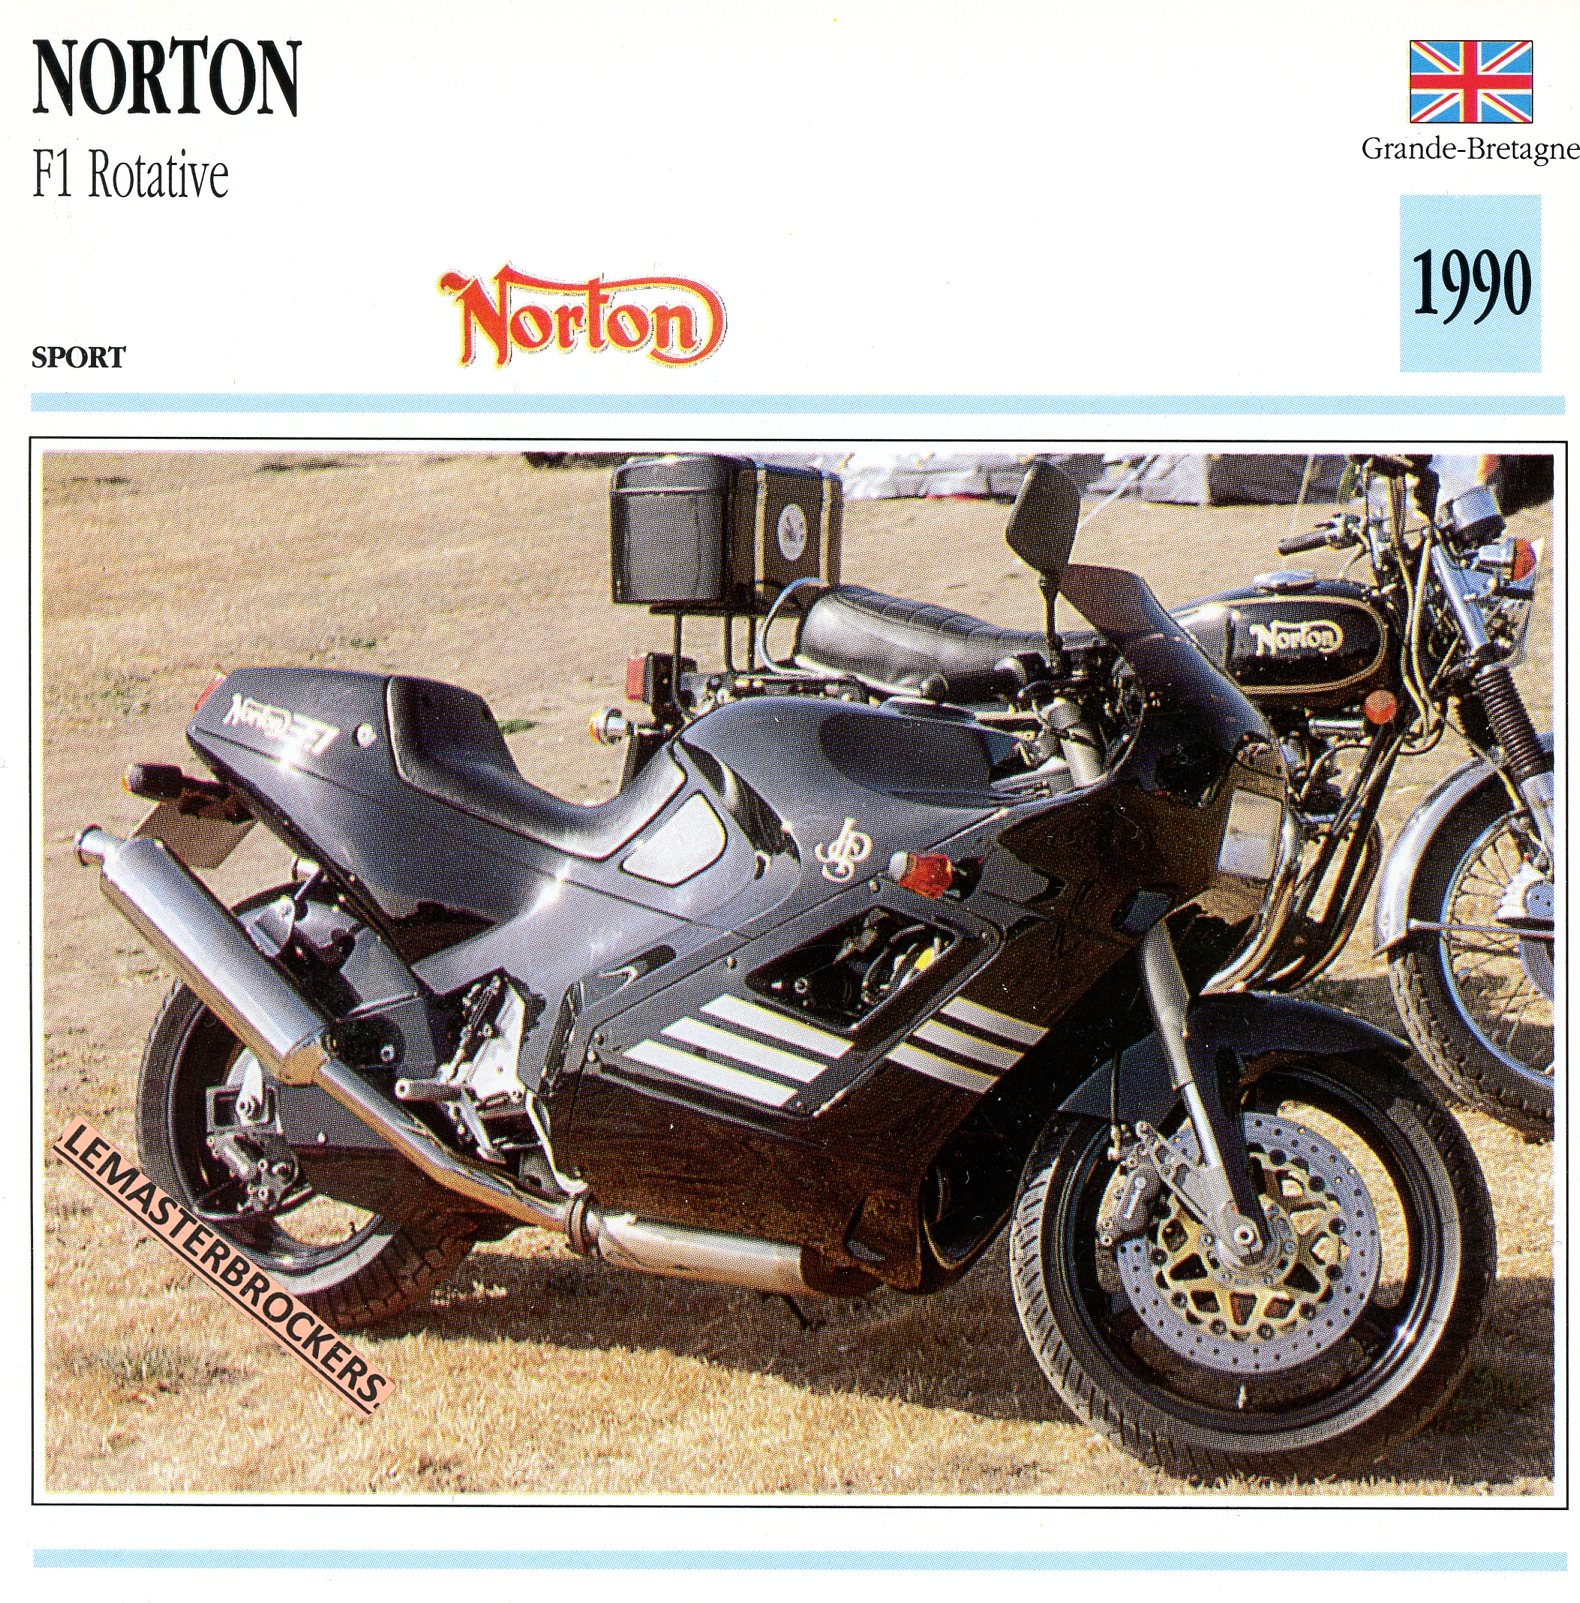 NORTON-F1-ROTATIVE-FICHE-MOTO-ATLAS-lemasterbrockers-CARD-MOTORCYCLE